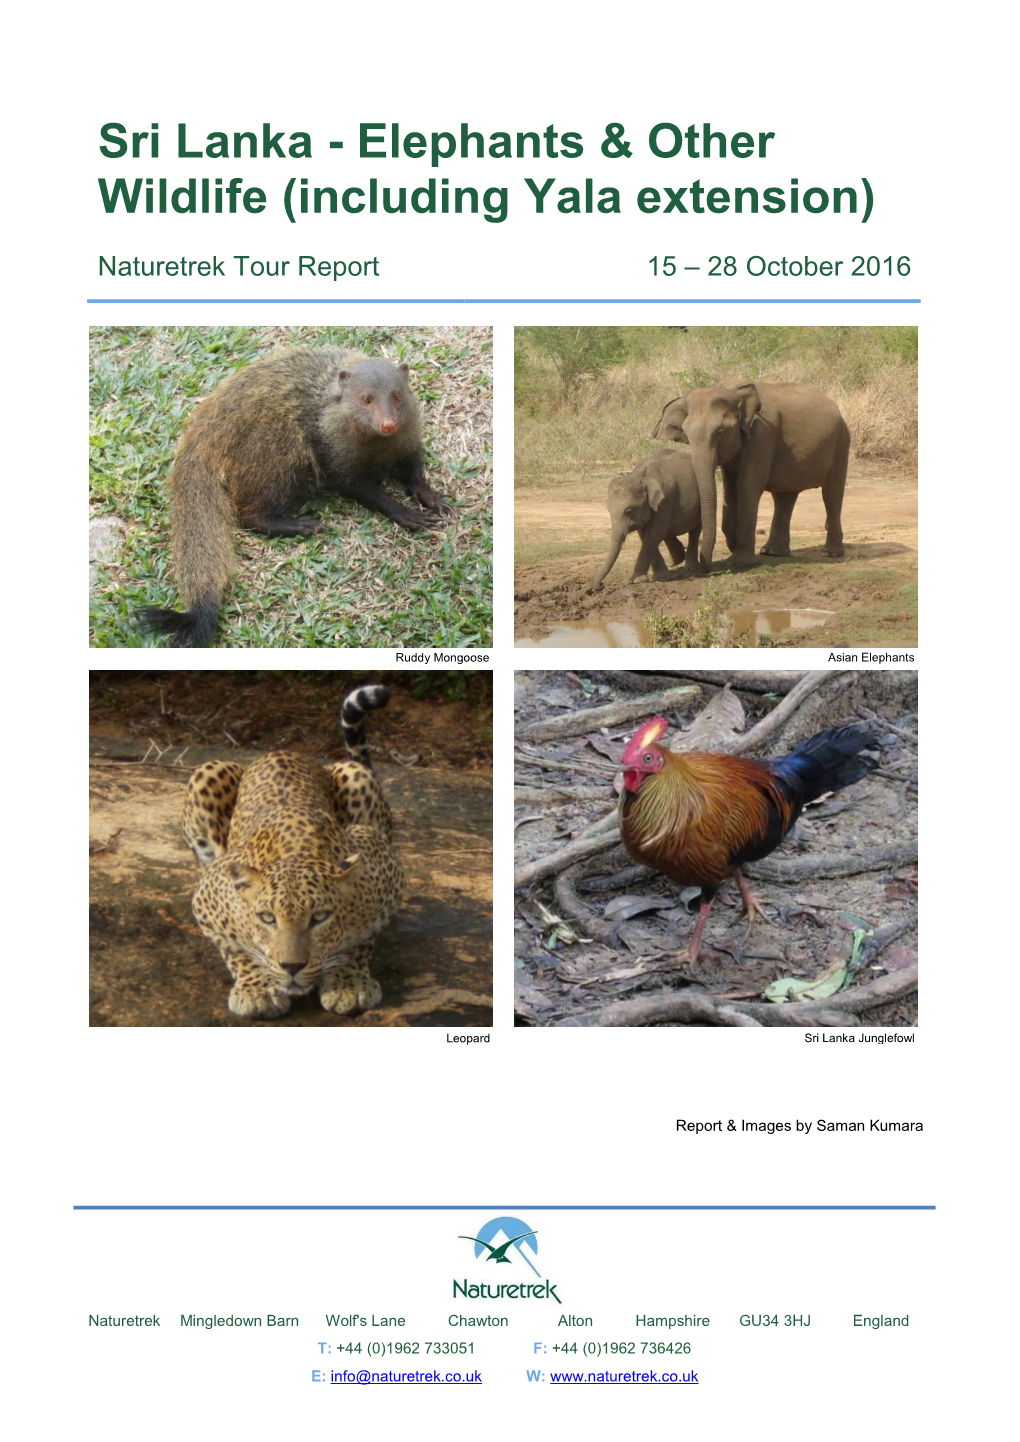 Sri Lanka - Elephants & Other Wildlife (Including Yala Extension)